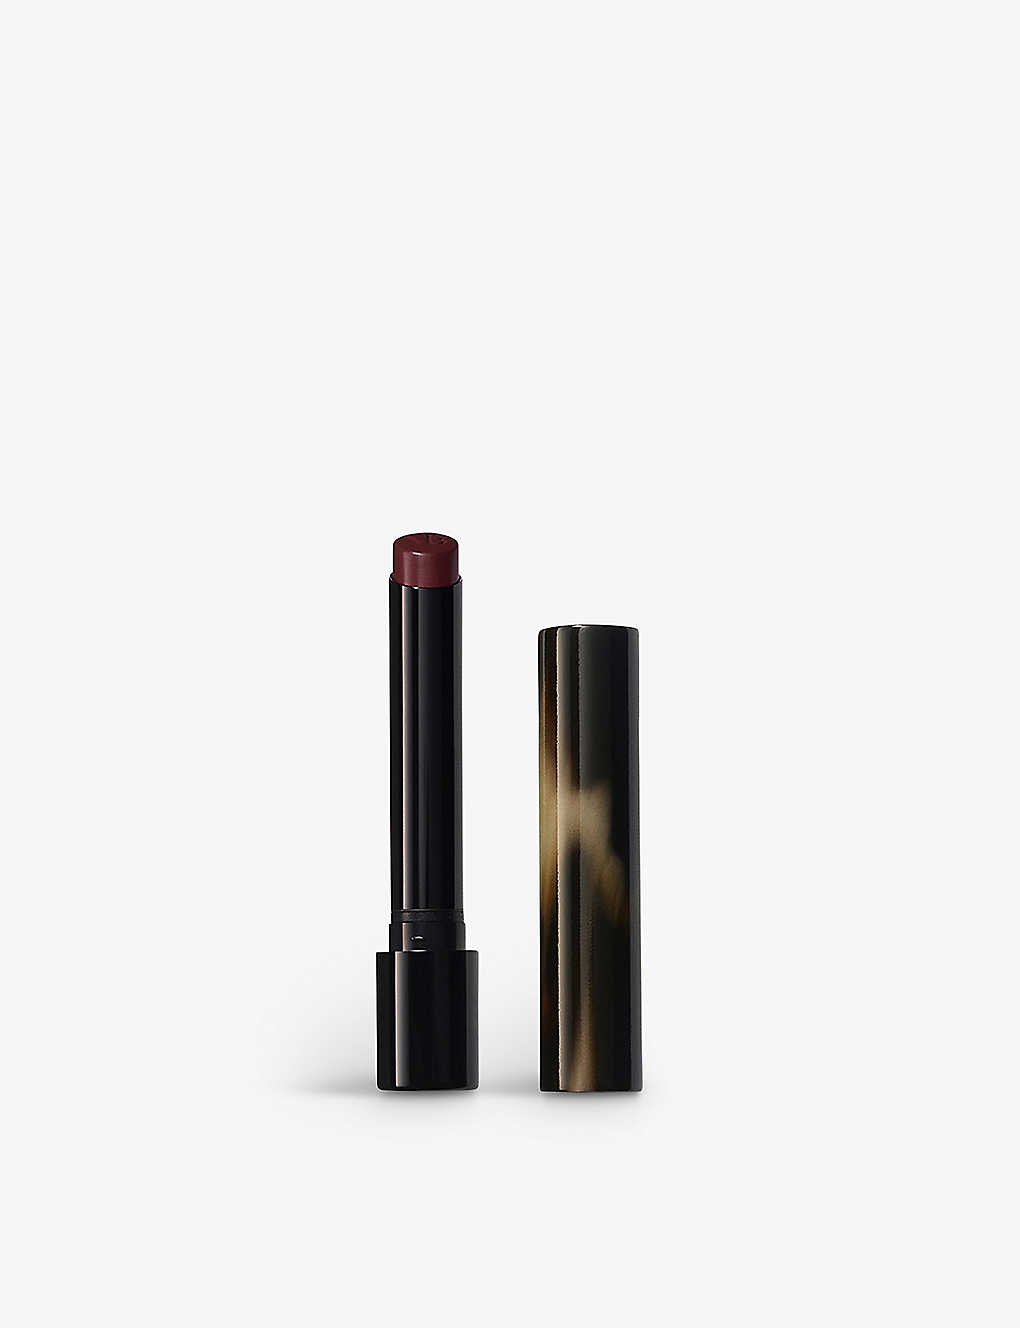 Victoria Beckham Beauty Play Posh Lipstick 1.9g